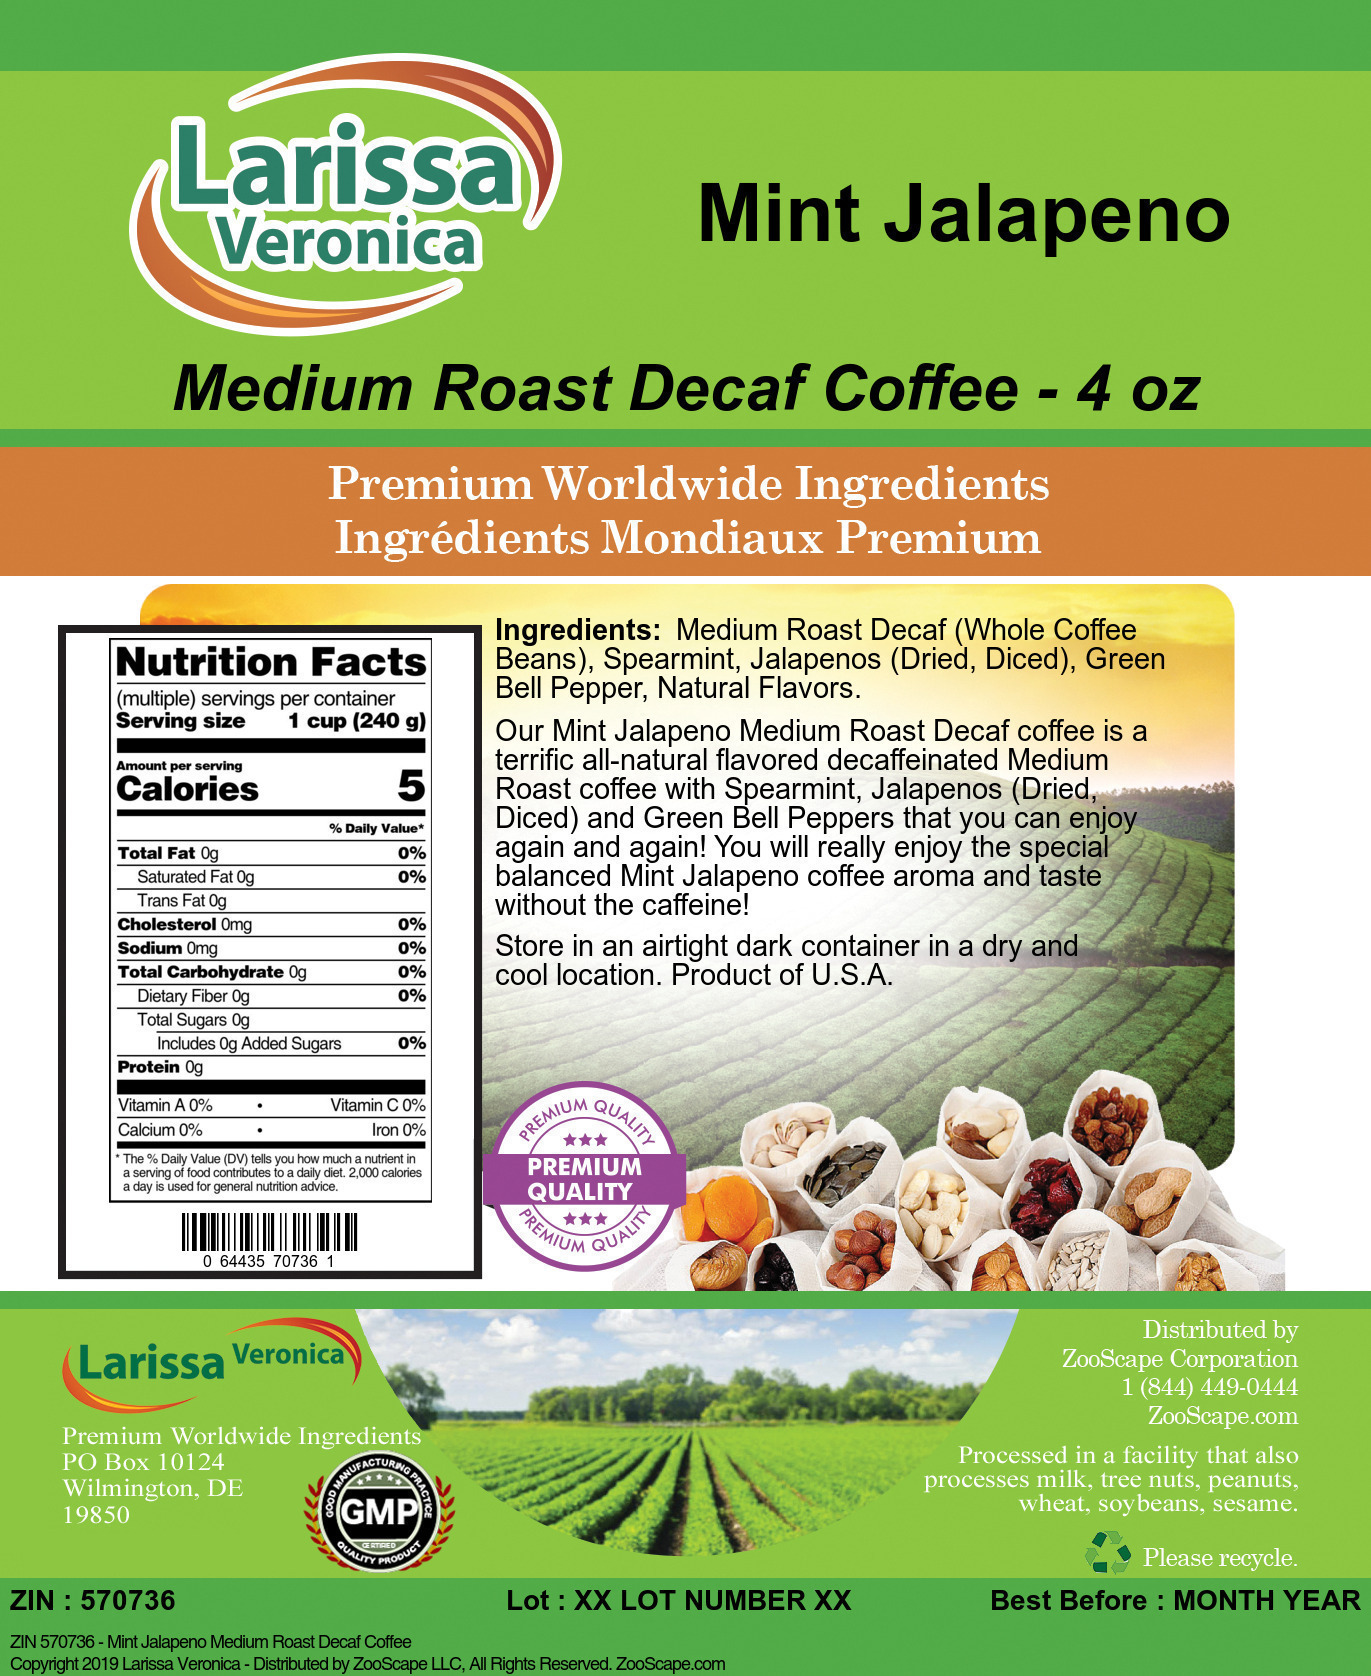 Mint Jalapeno Medium Roast Decaf Coffee - Label